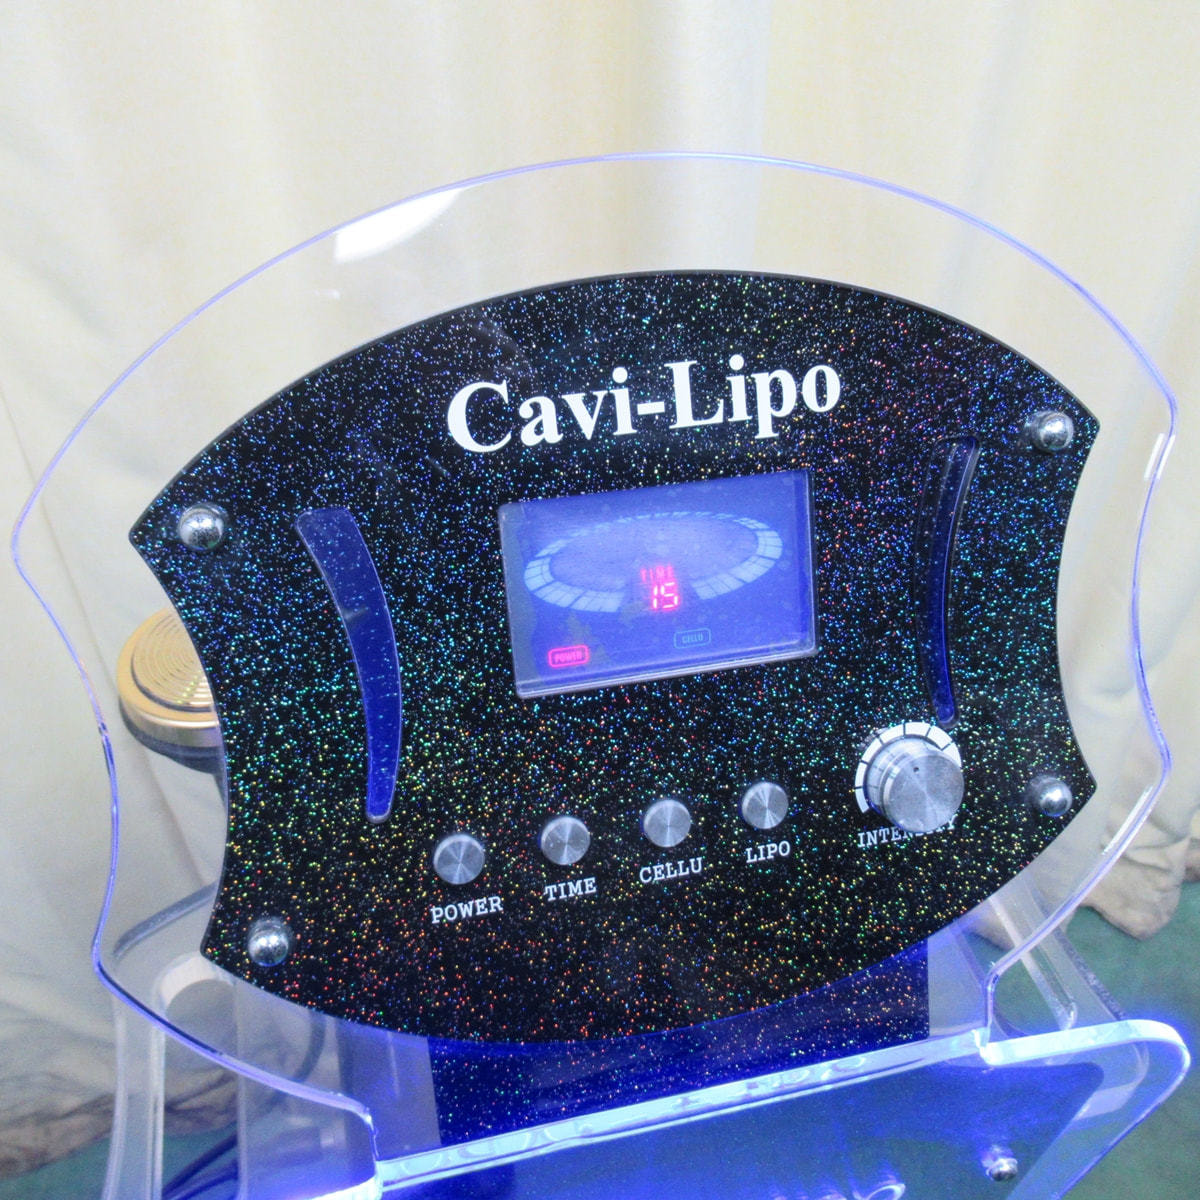 Cavi-Lipoキャピリポ